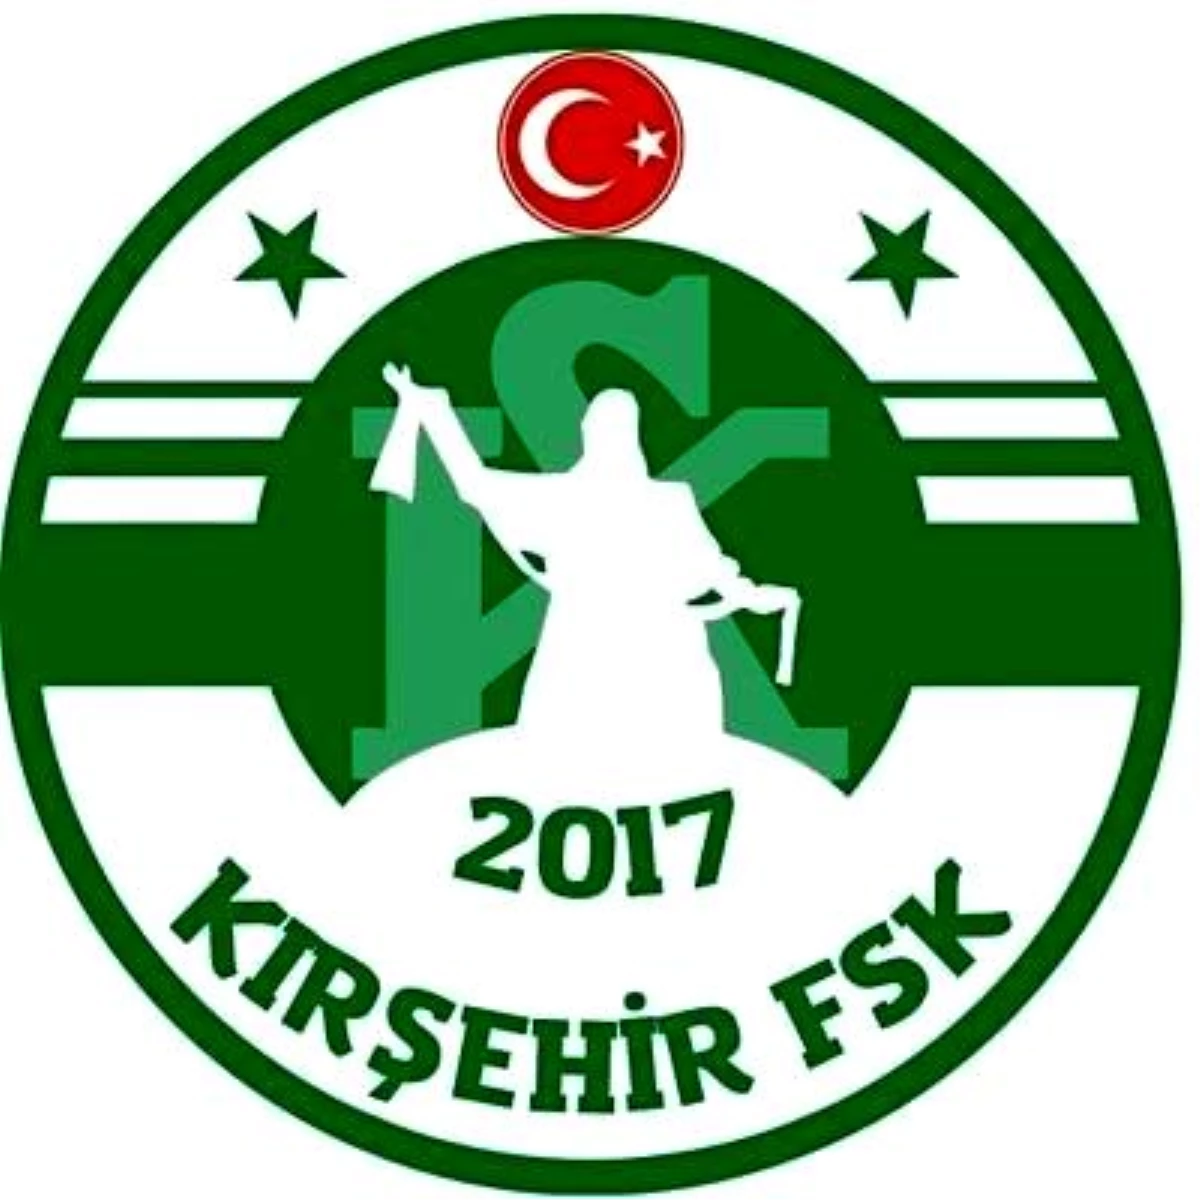 Kırşehir Futbol Kulübü İlk Maçta Mağlup Oldu